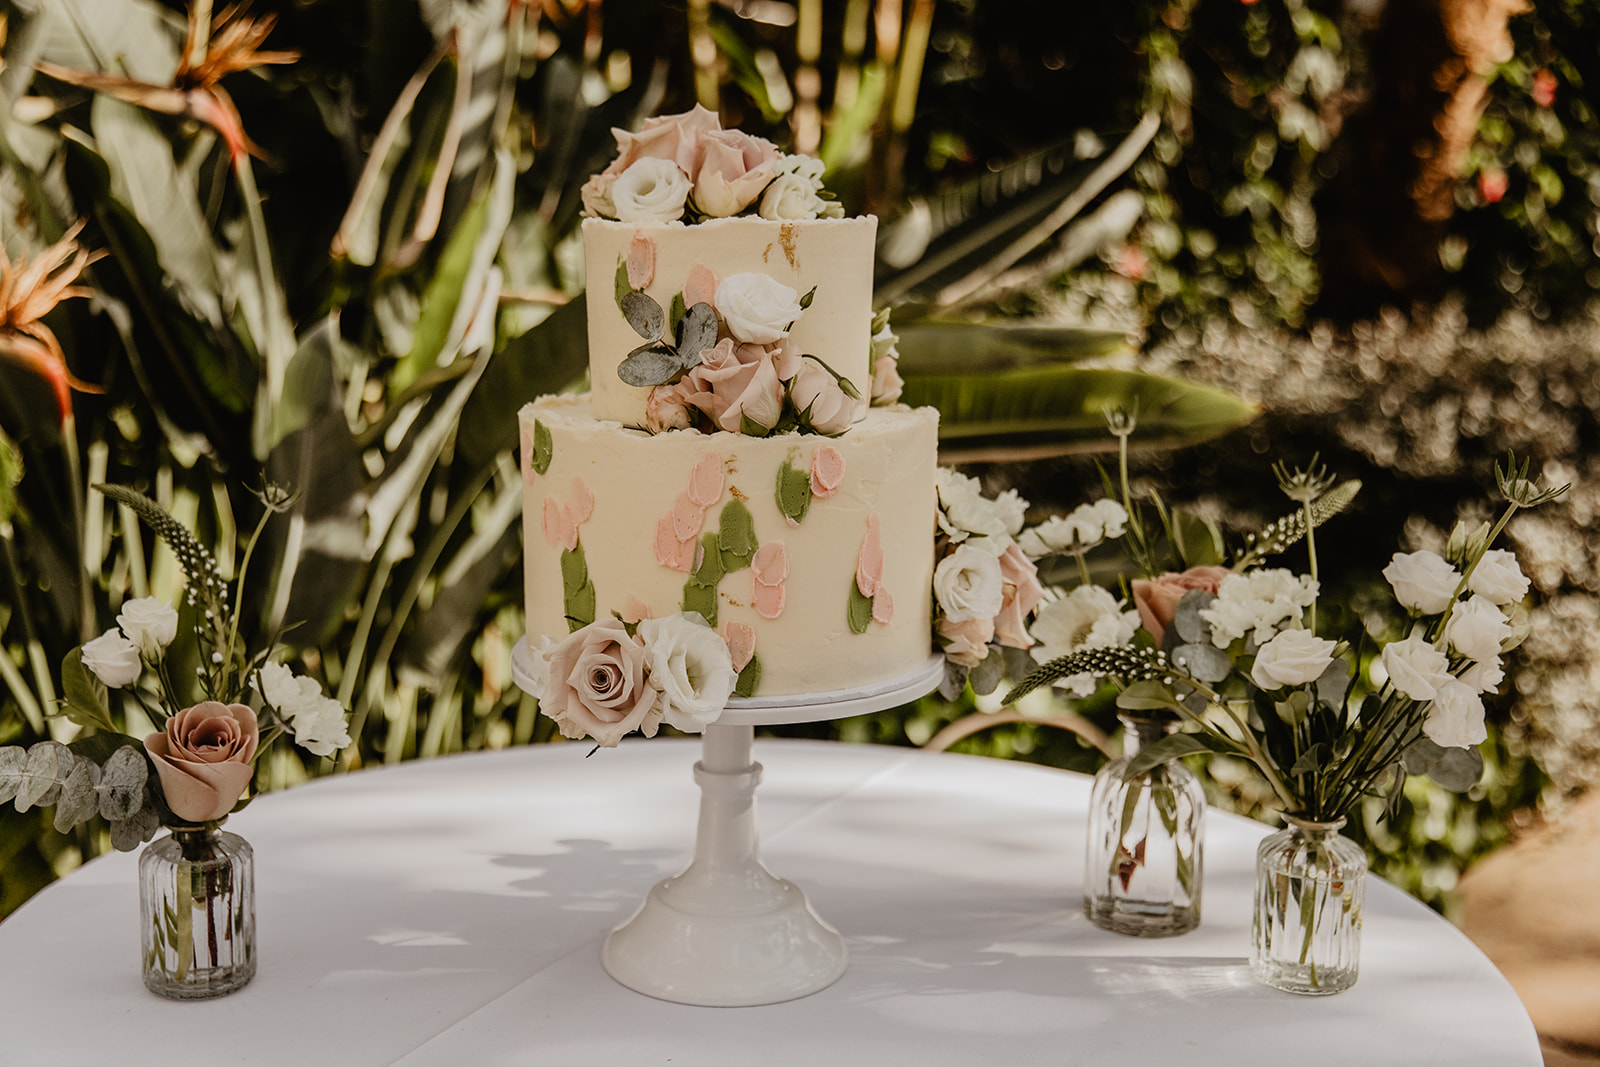 Wedding cake at a RHS Gardens Wisley Wedding. By Olive Joy Photography